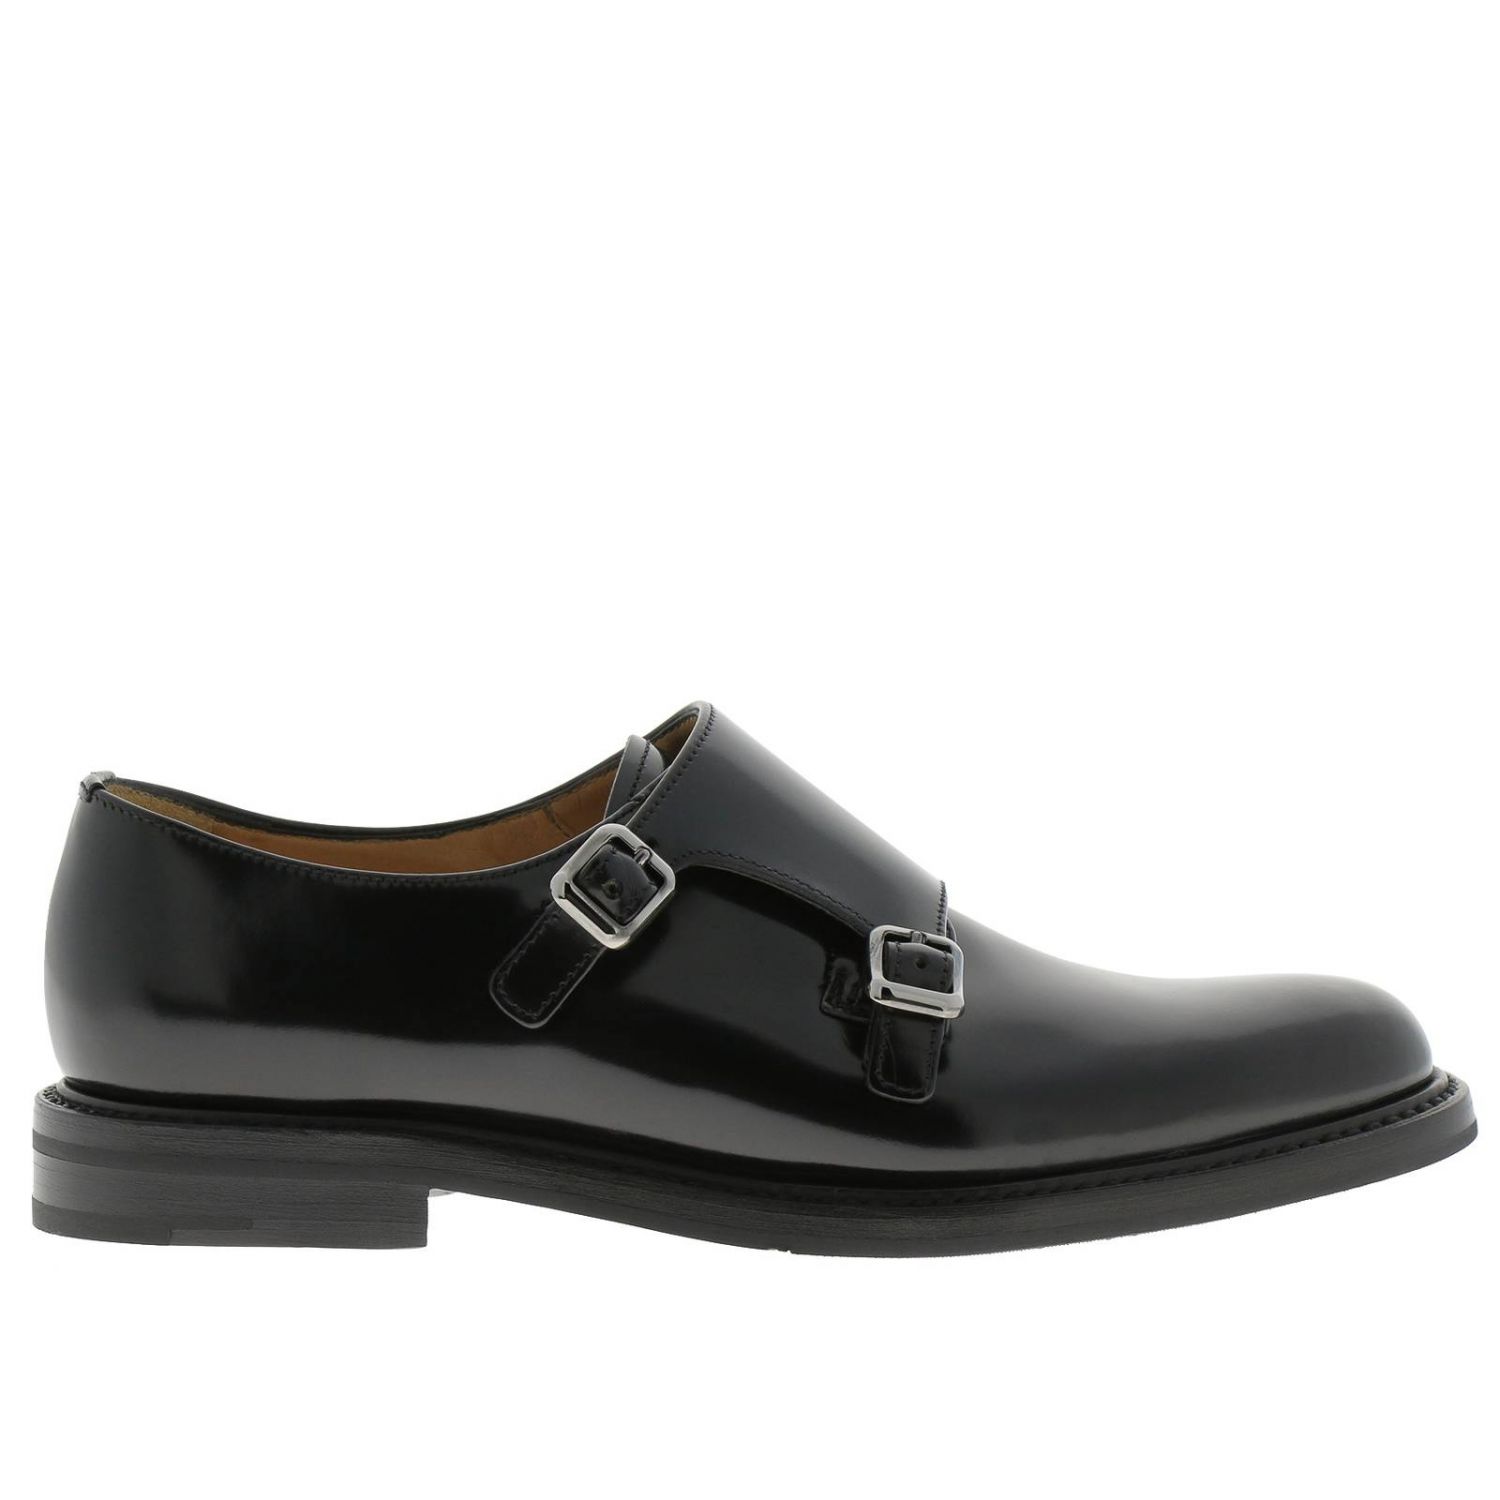 Oxford shoes Church's: Shoes women Church's black 1